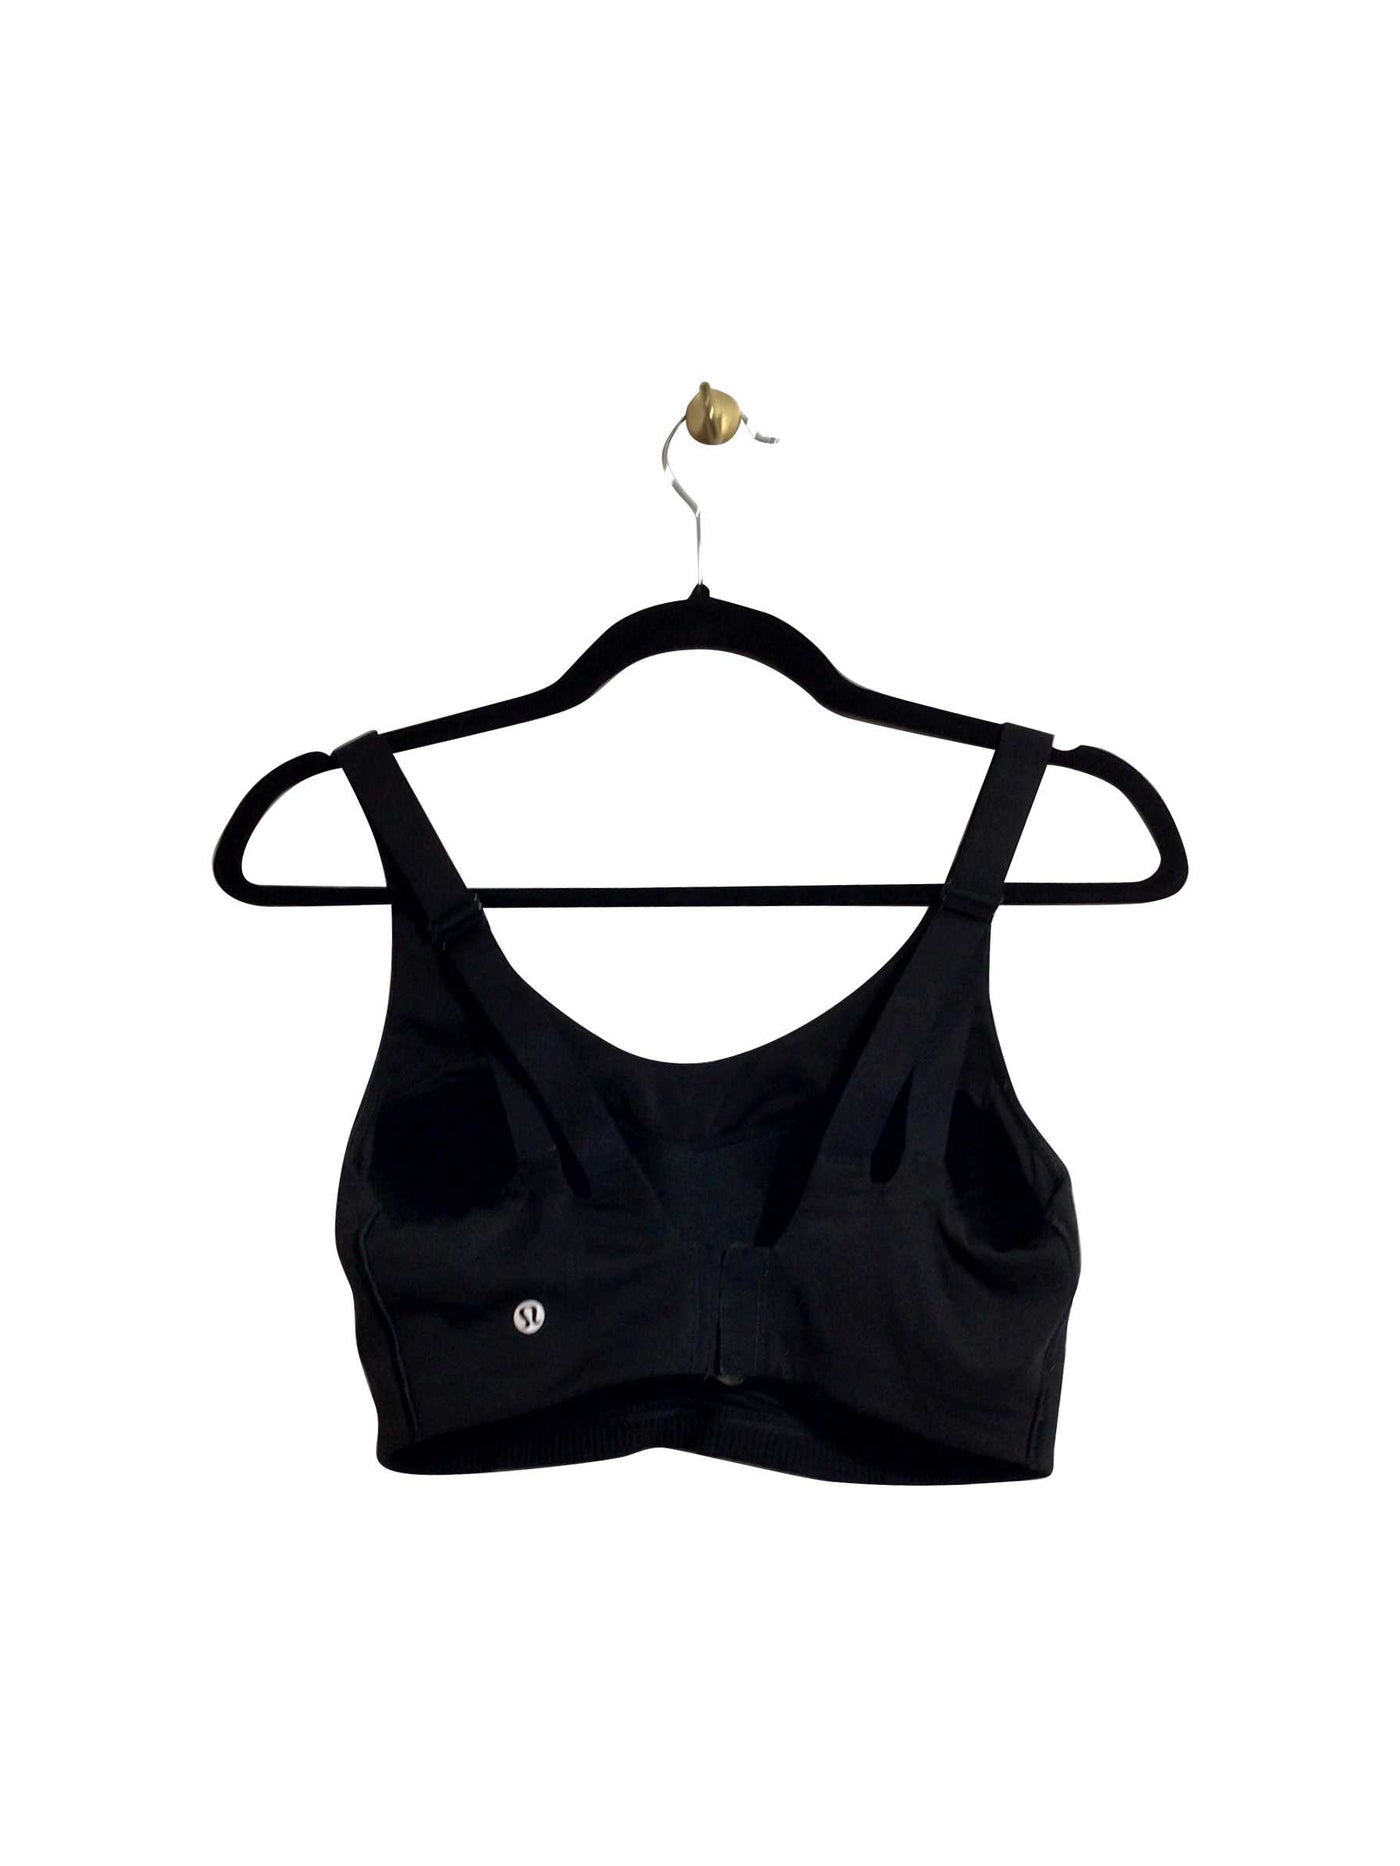 LULULEMON Regular fit Activewear Sport bra in Black - Size 34DD | 17.89 $ KOOP